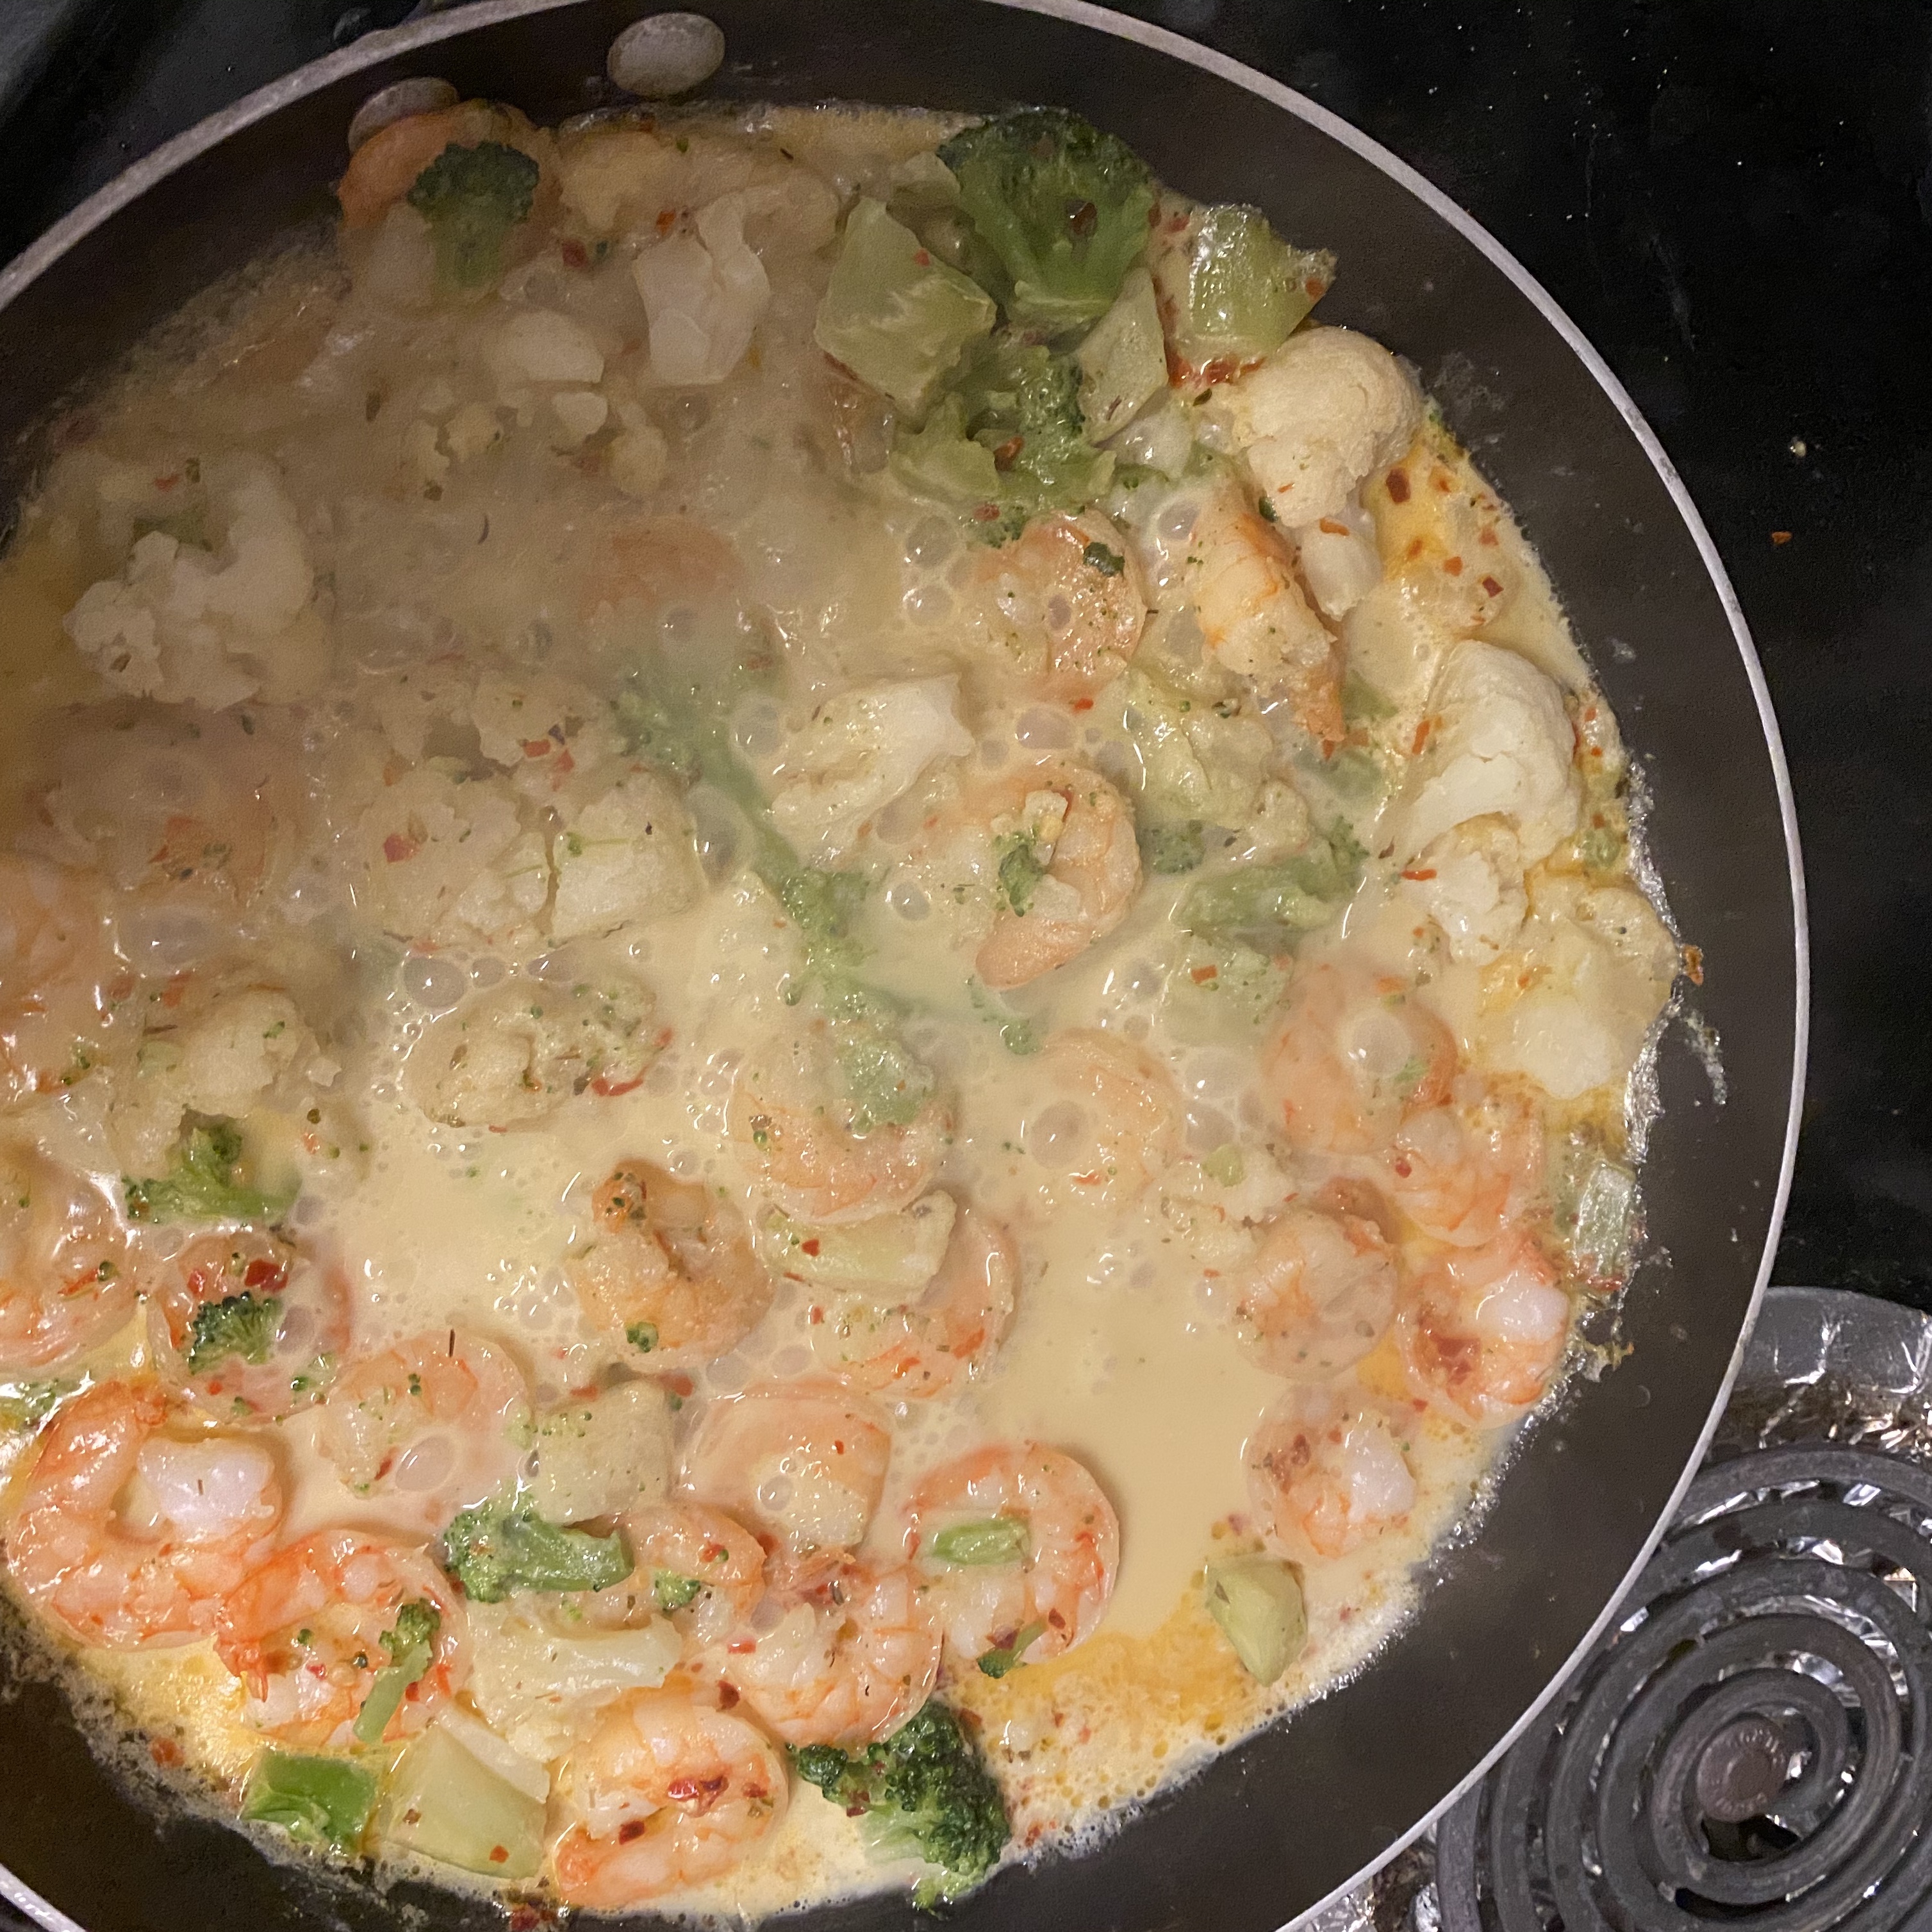 cooking shrimp